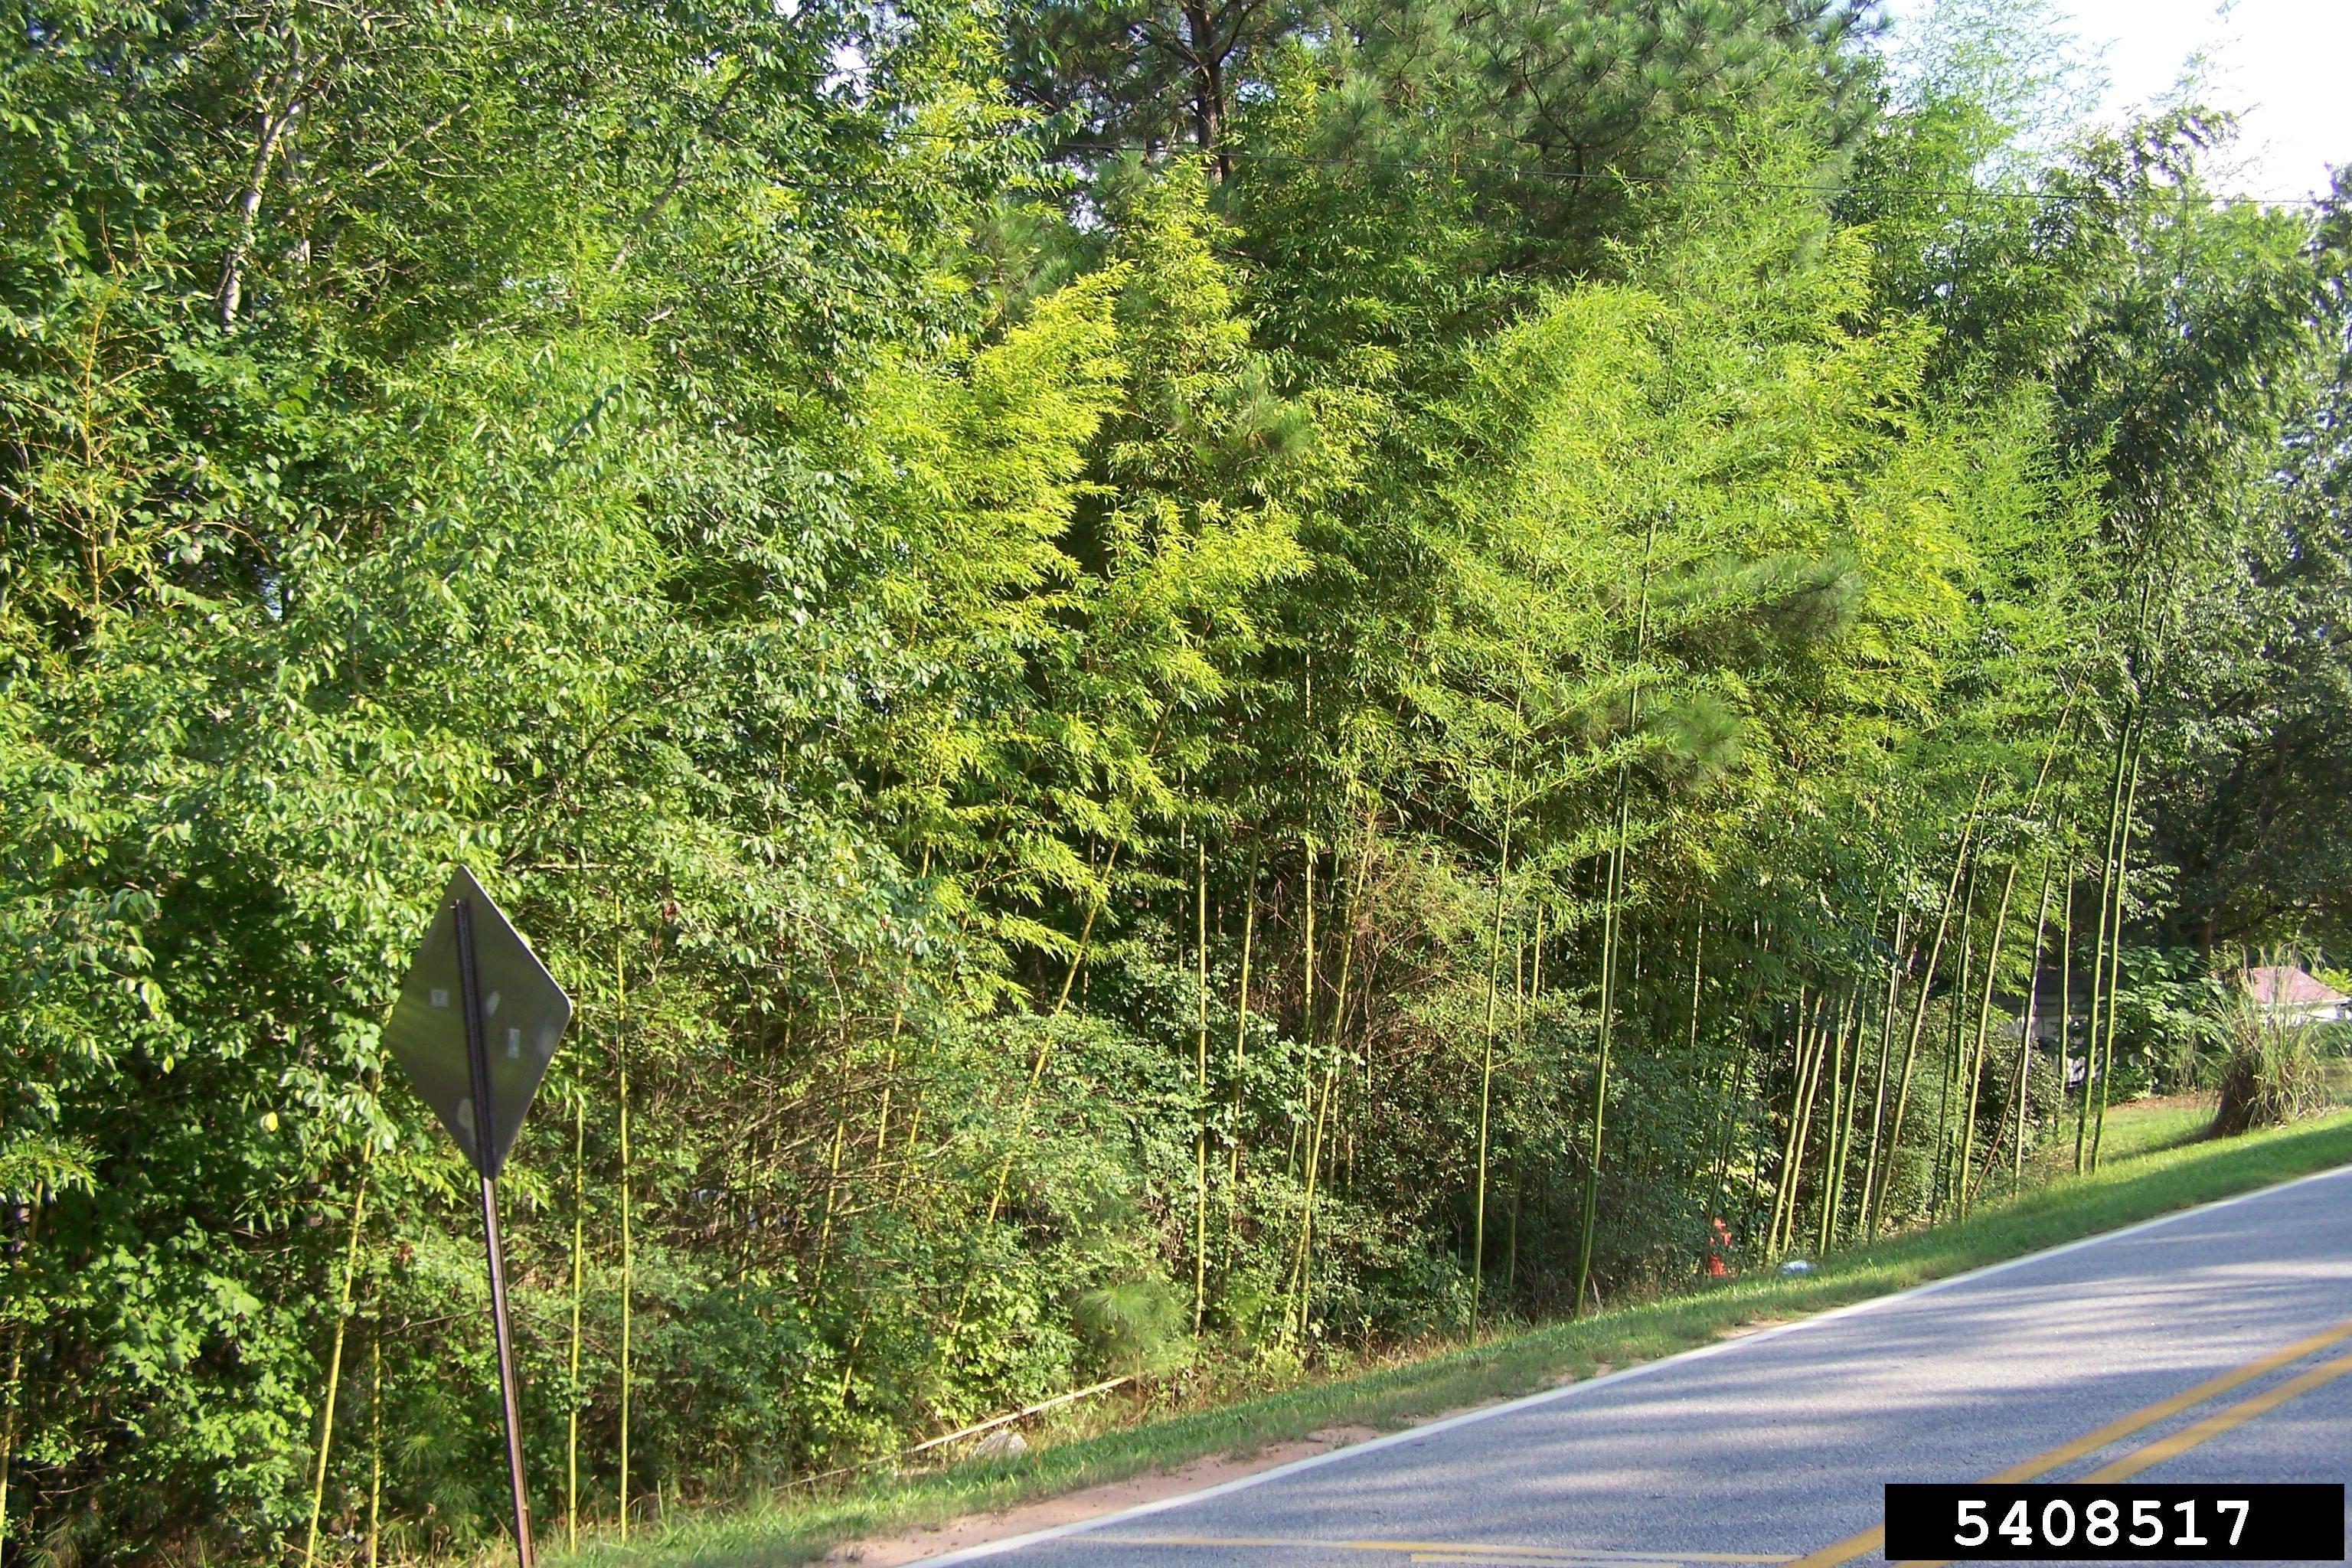 Roadside growth of golden bamboo. Photo by Karan Rawlins, University of Georgia-bugwood.org